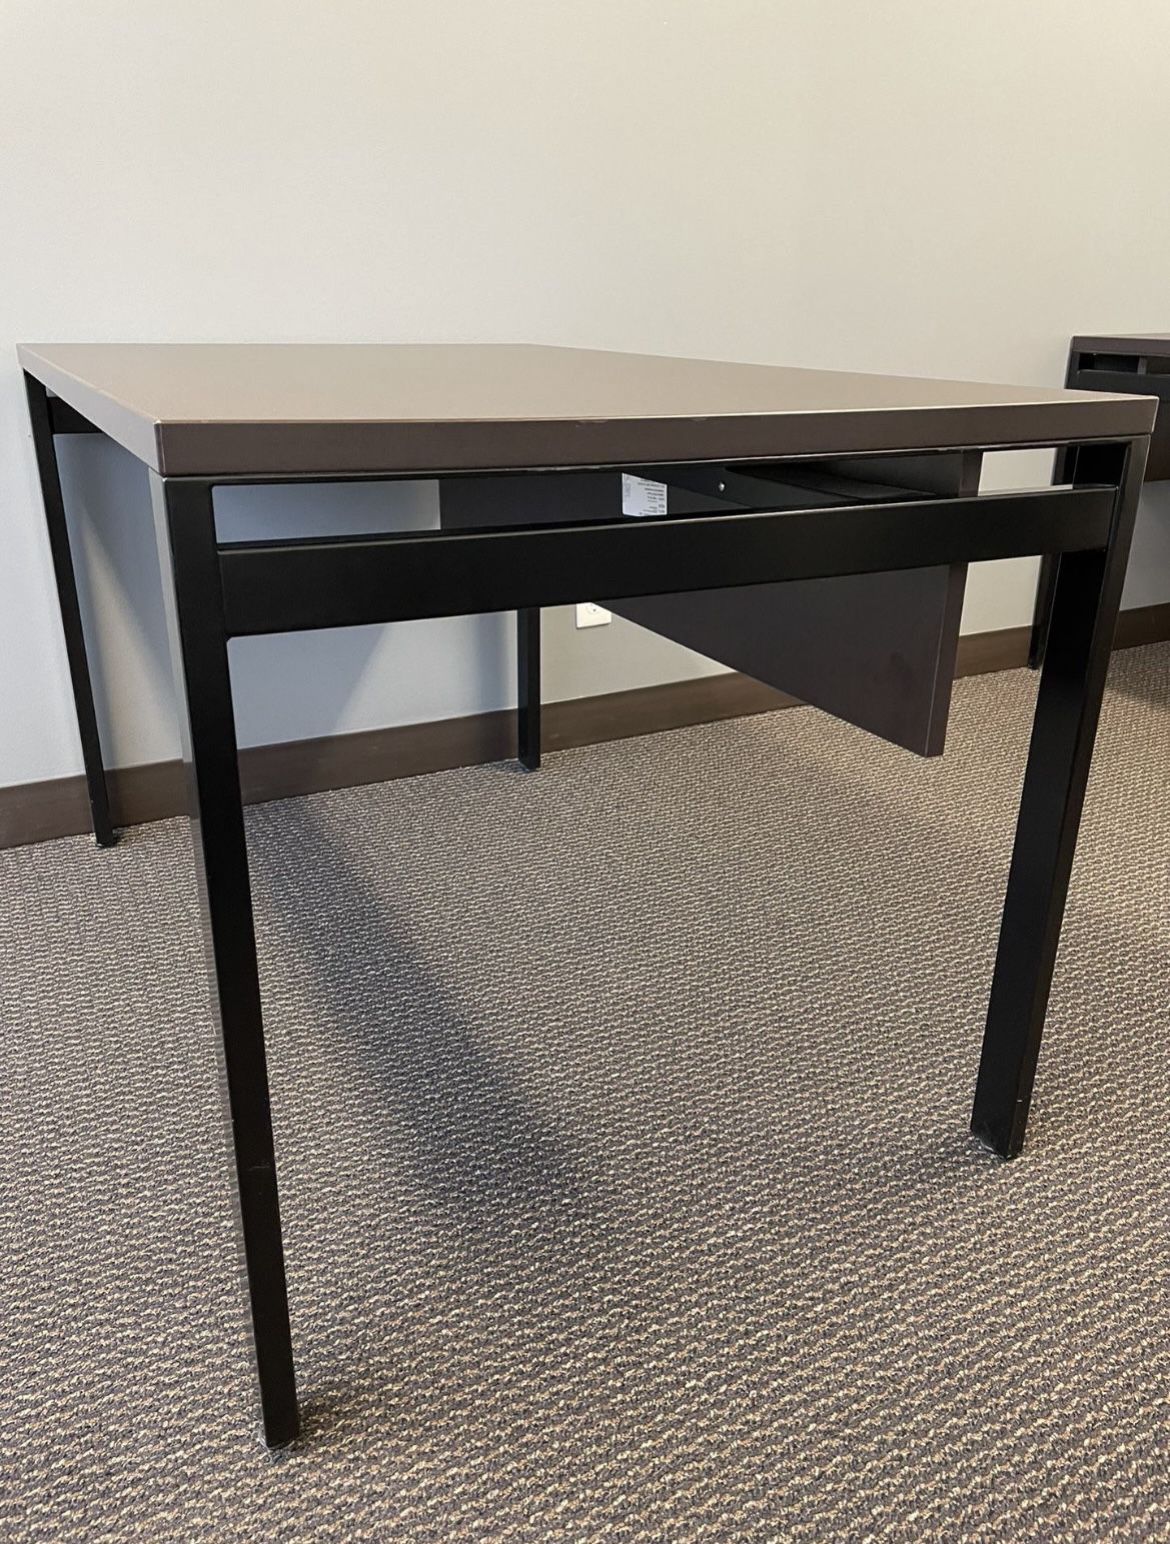 Sturdy, Gently Used Office Desks 